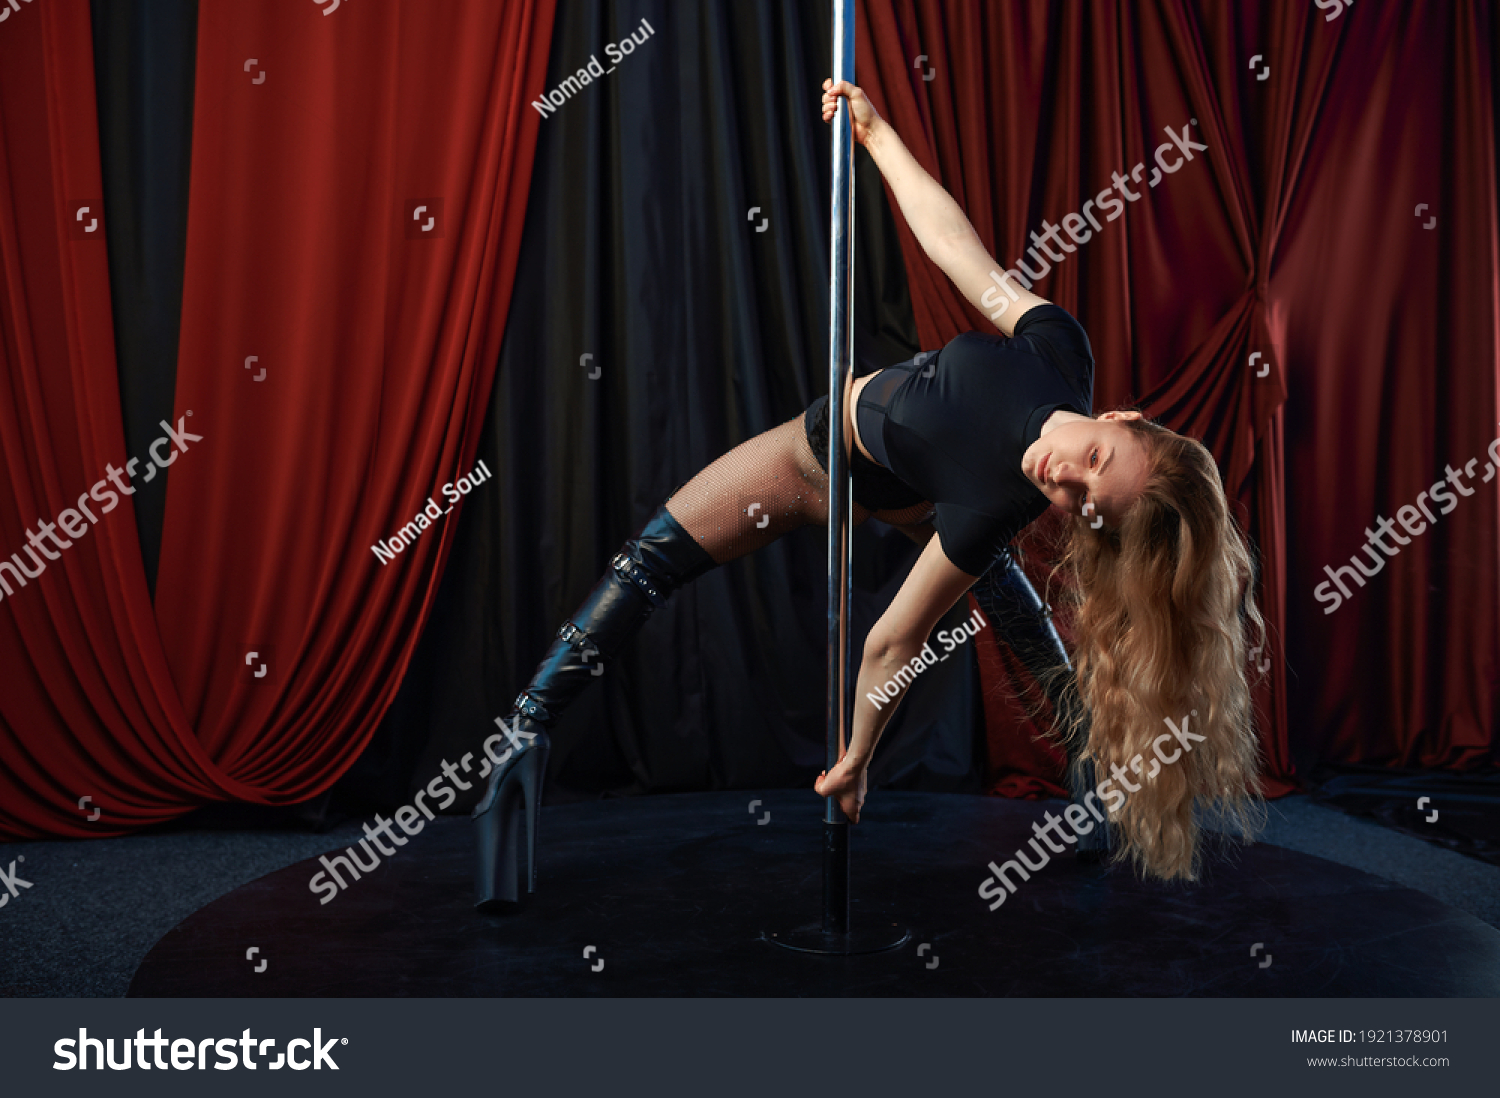 Sexy Showgirl On Stage Pole Dance库存照片1921378901 Shutterstock 